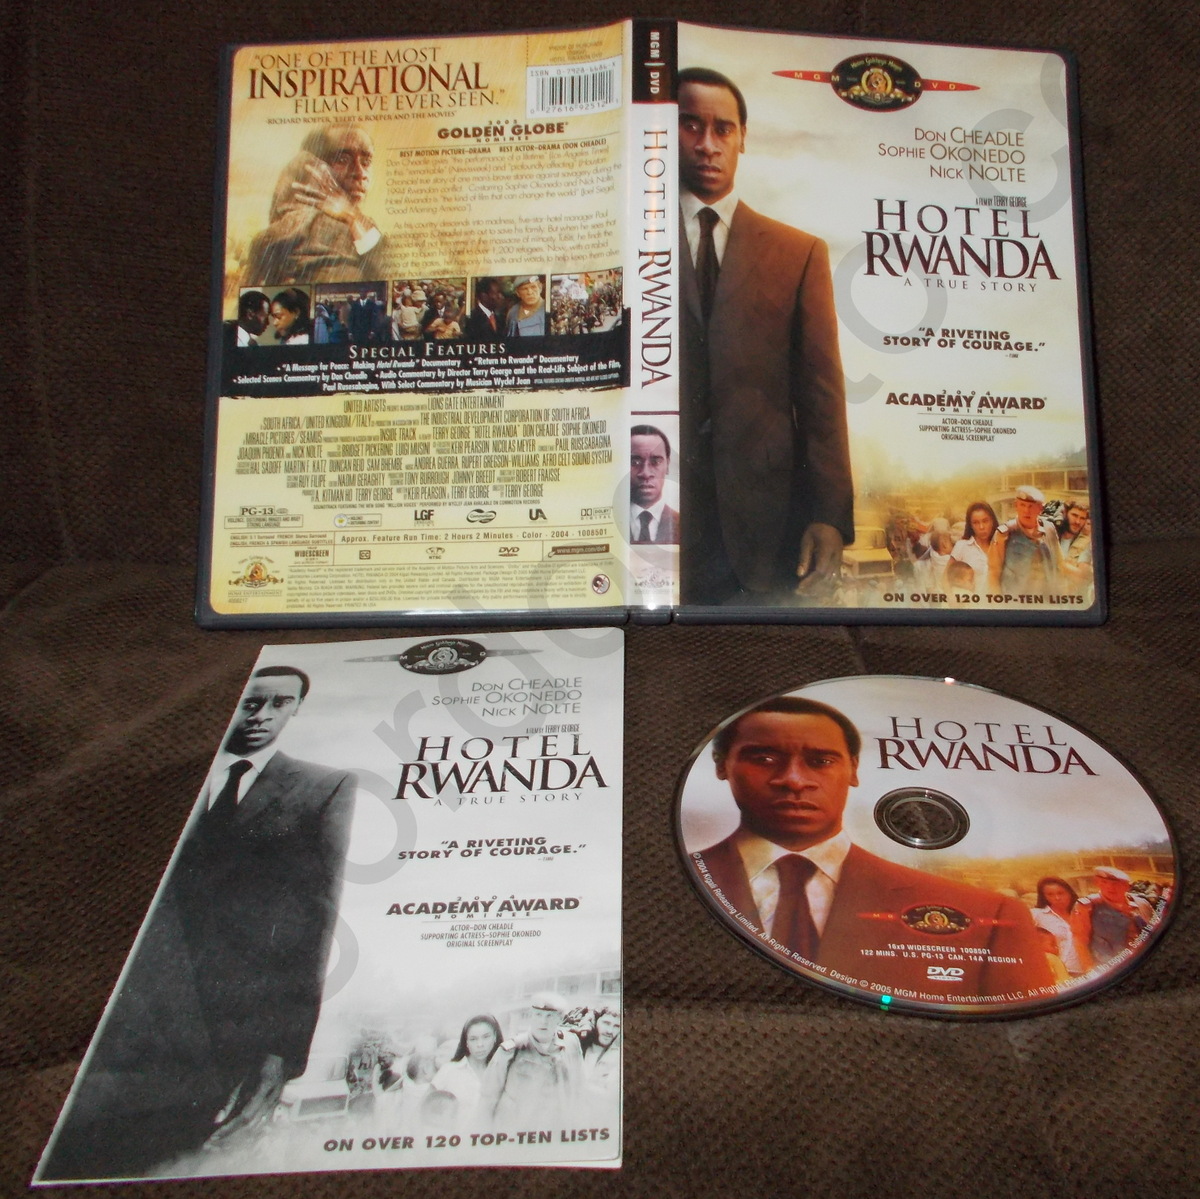 Hotel Rwanda (DVD, 2004) Don Cheadle, Nick Nolte